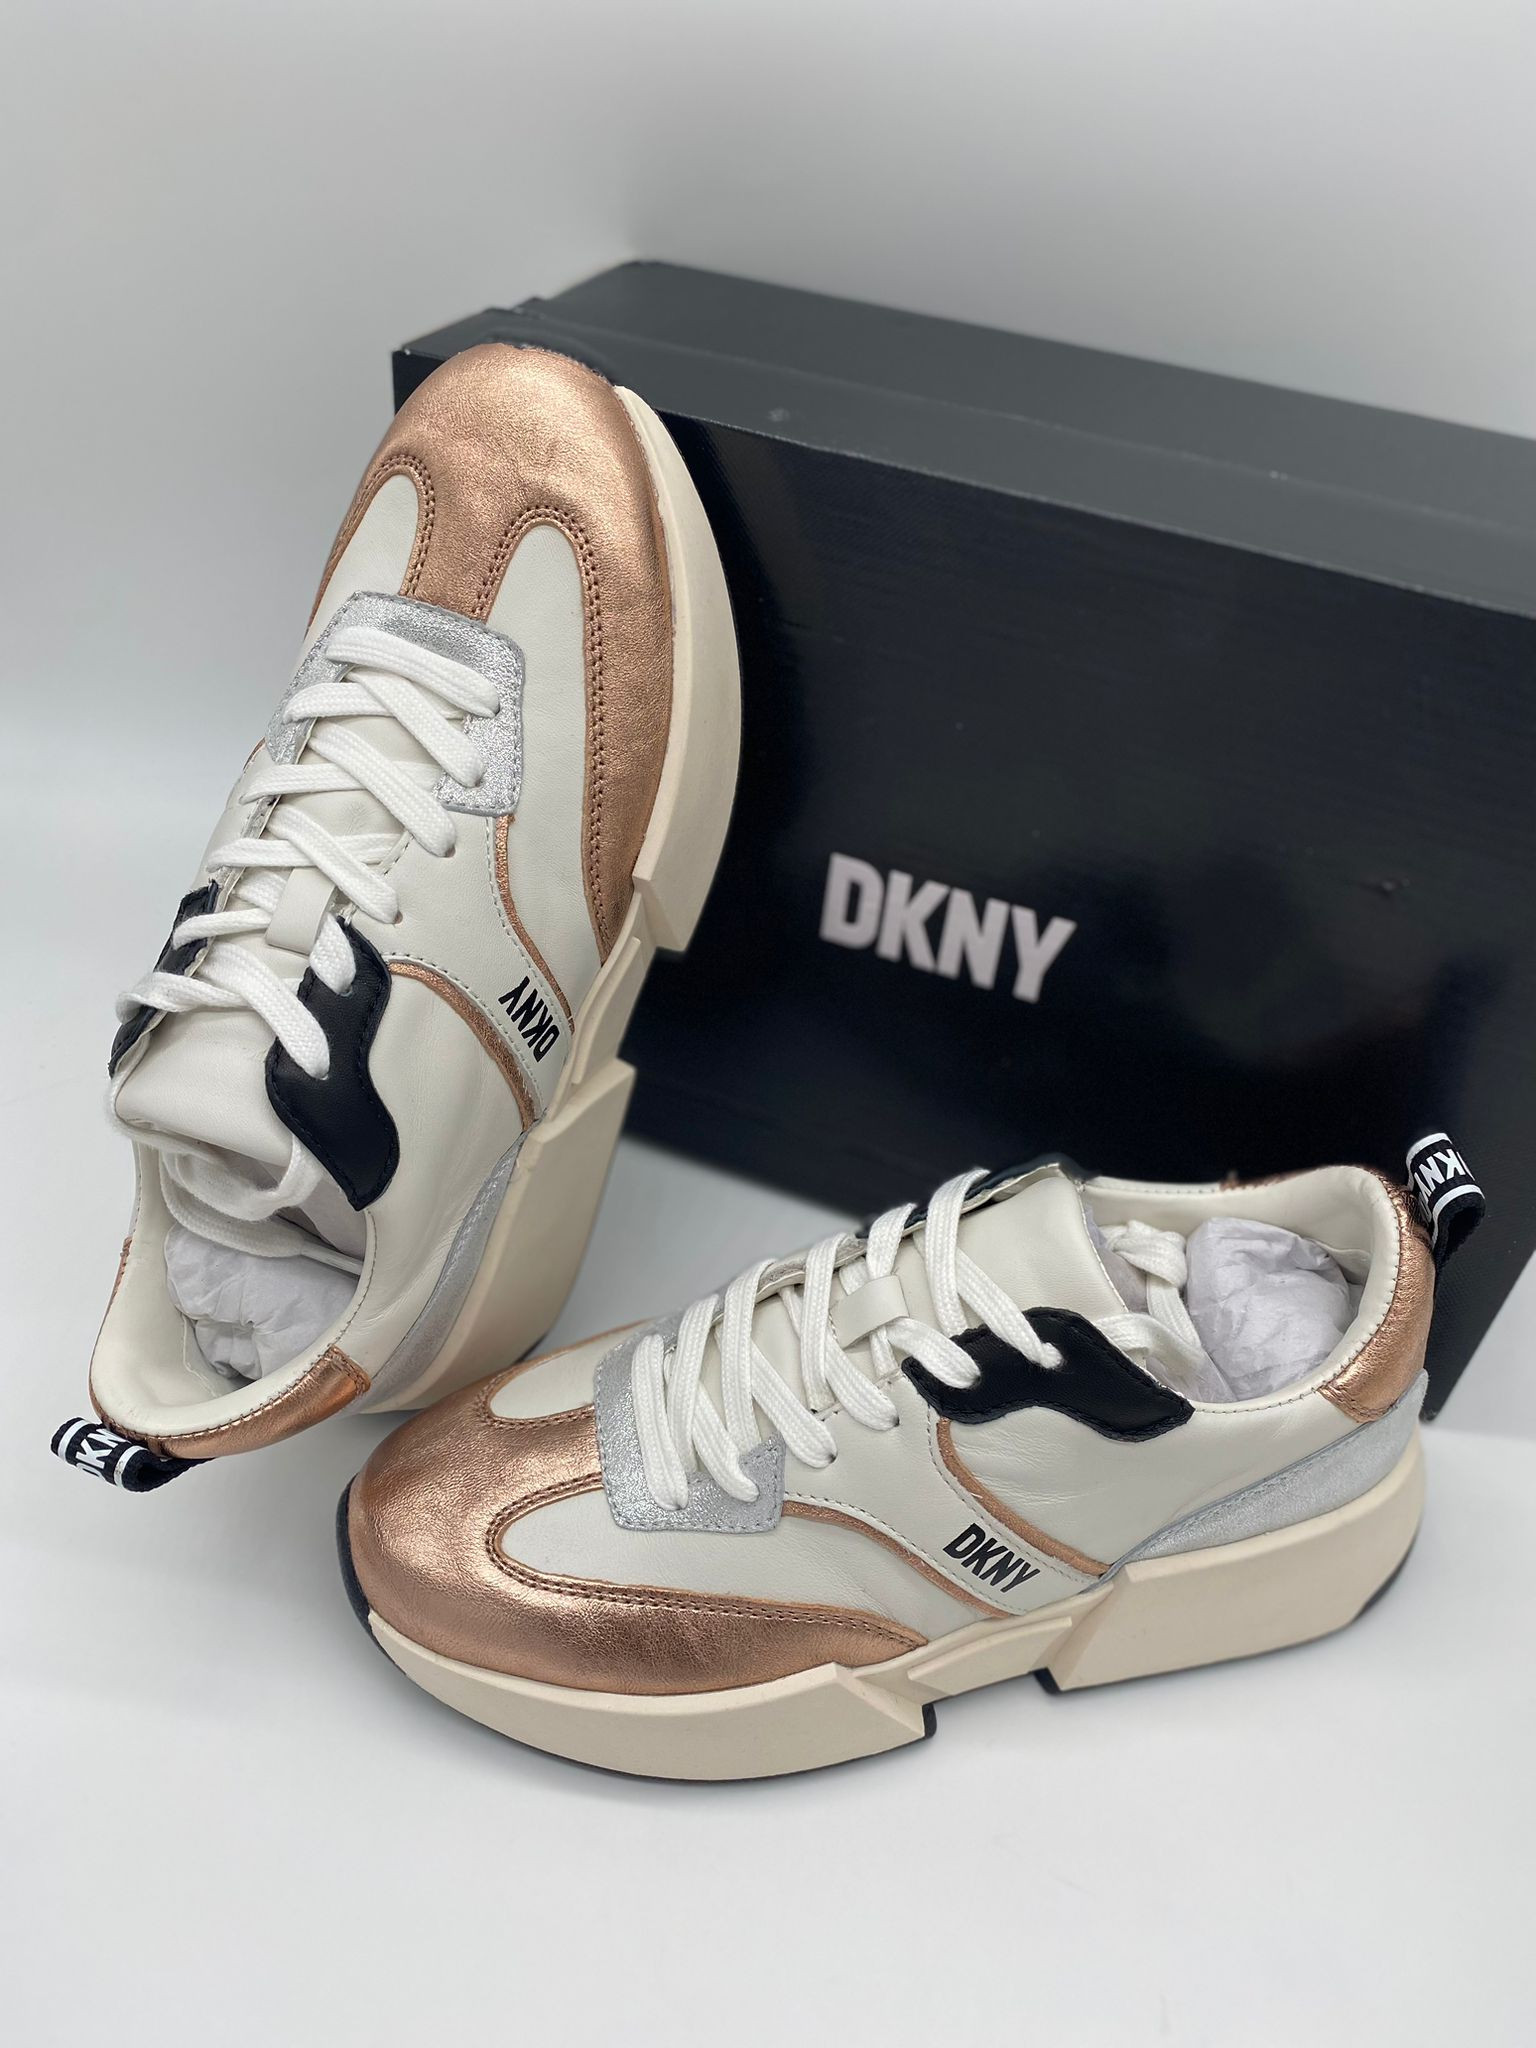 DKNY Retro Sneaker - Wht/Blk/Sil - US 6.5/ EUR 37/ UK 4